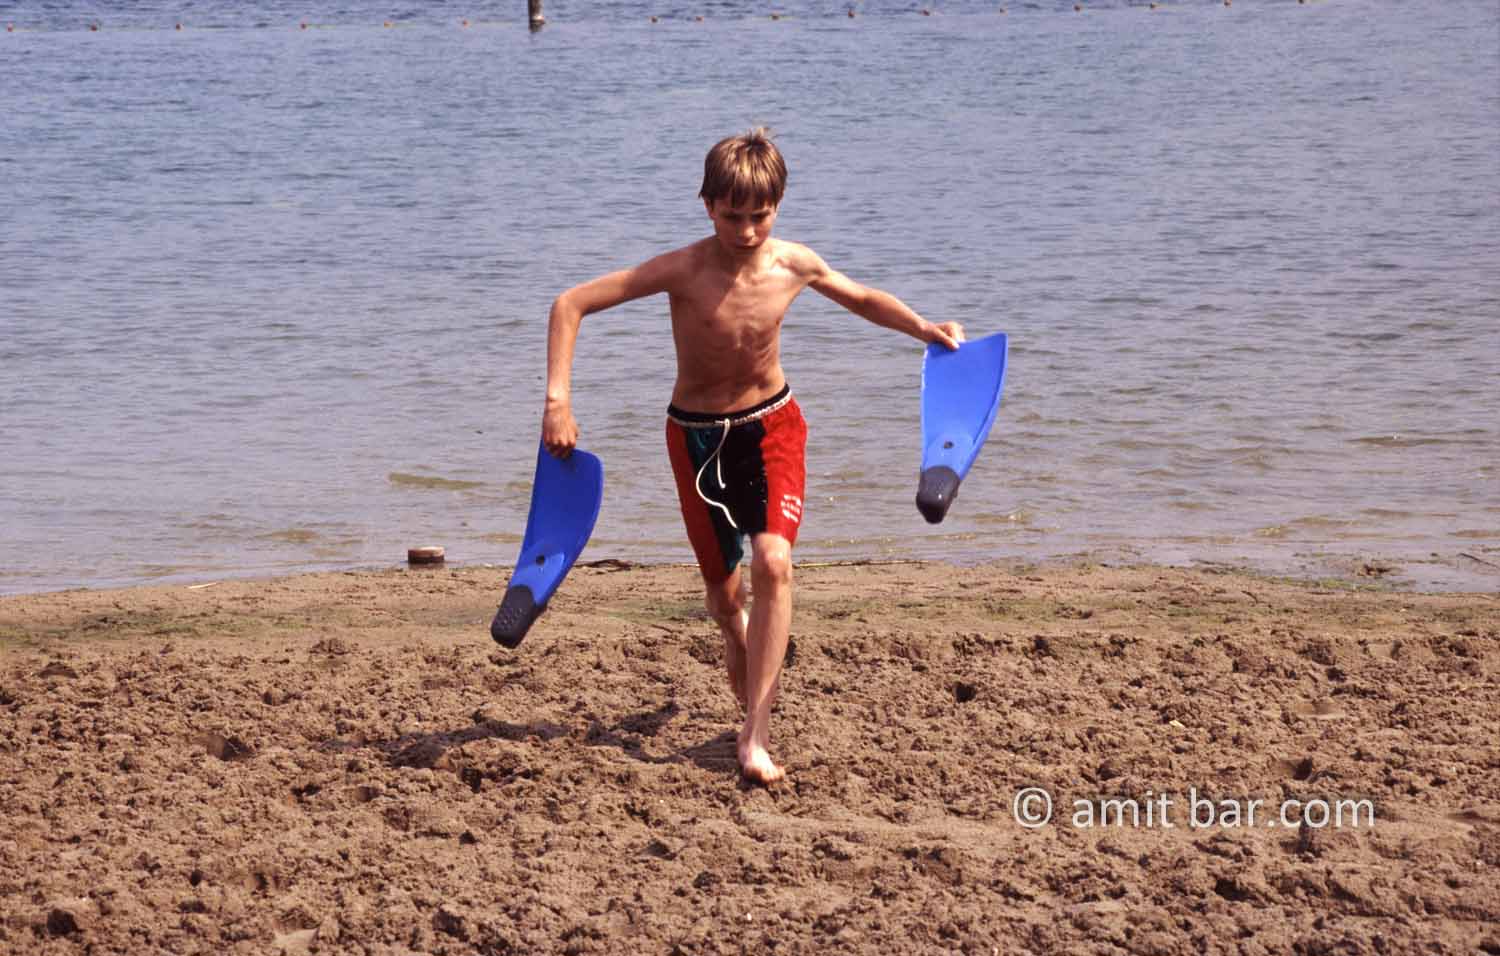 Swim fins: A boy is running with his swim fins